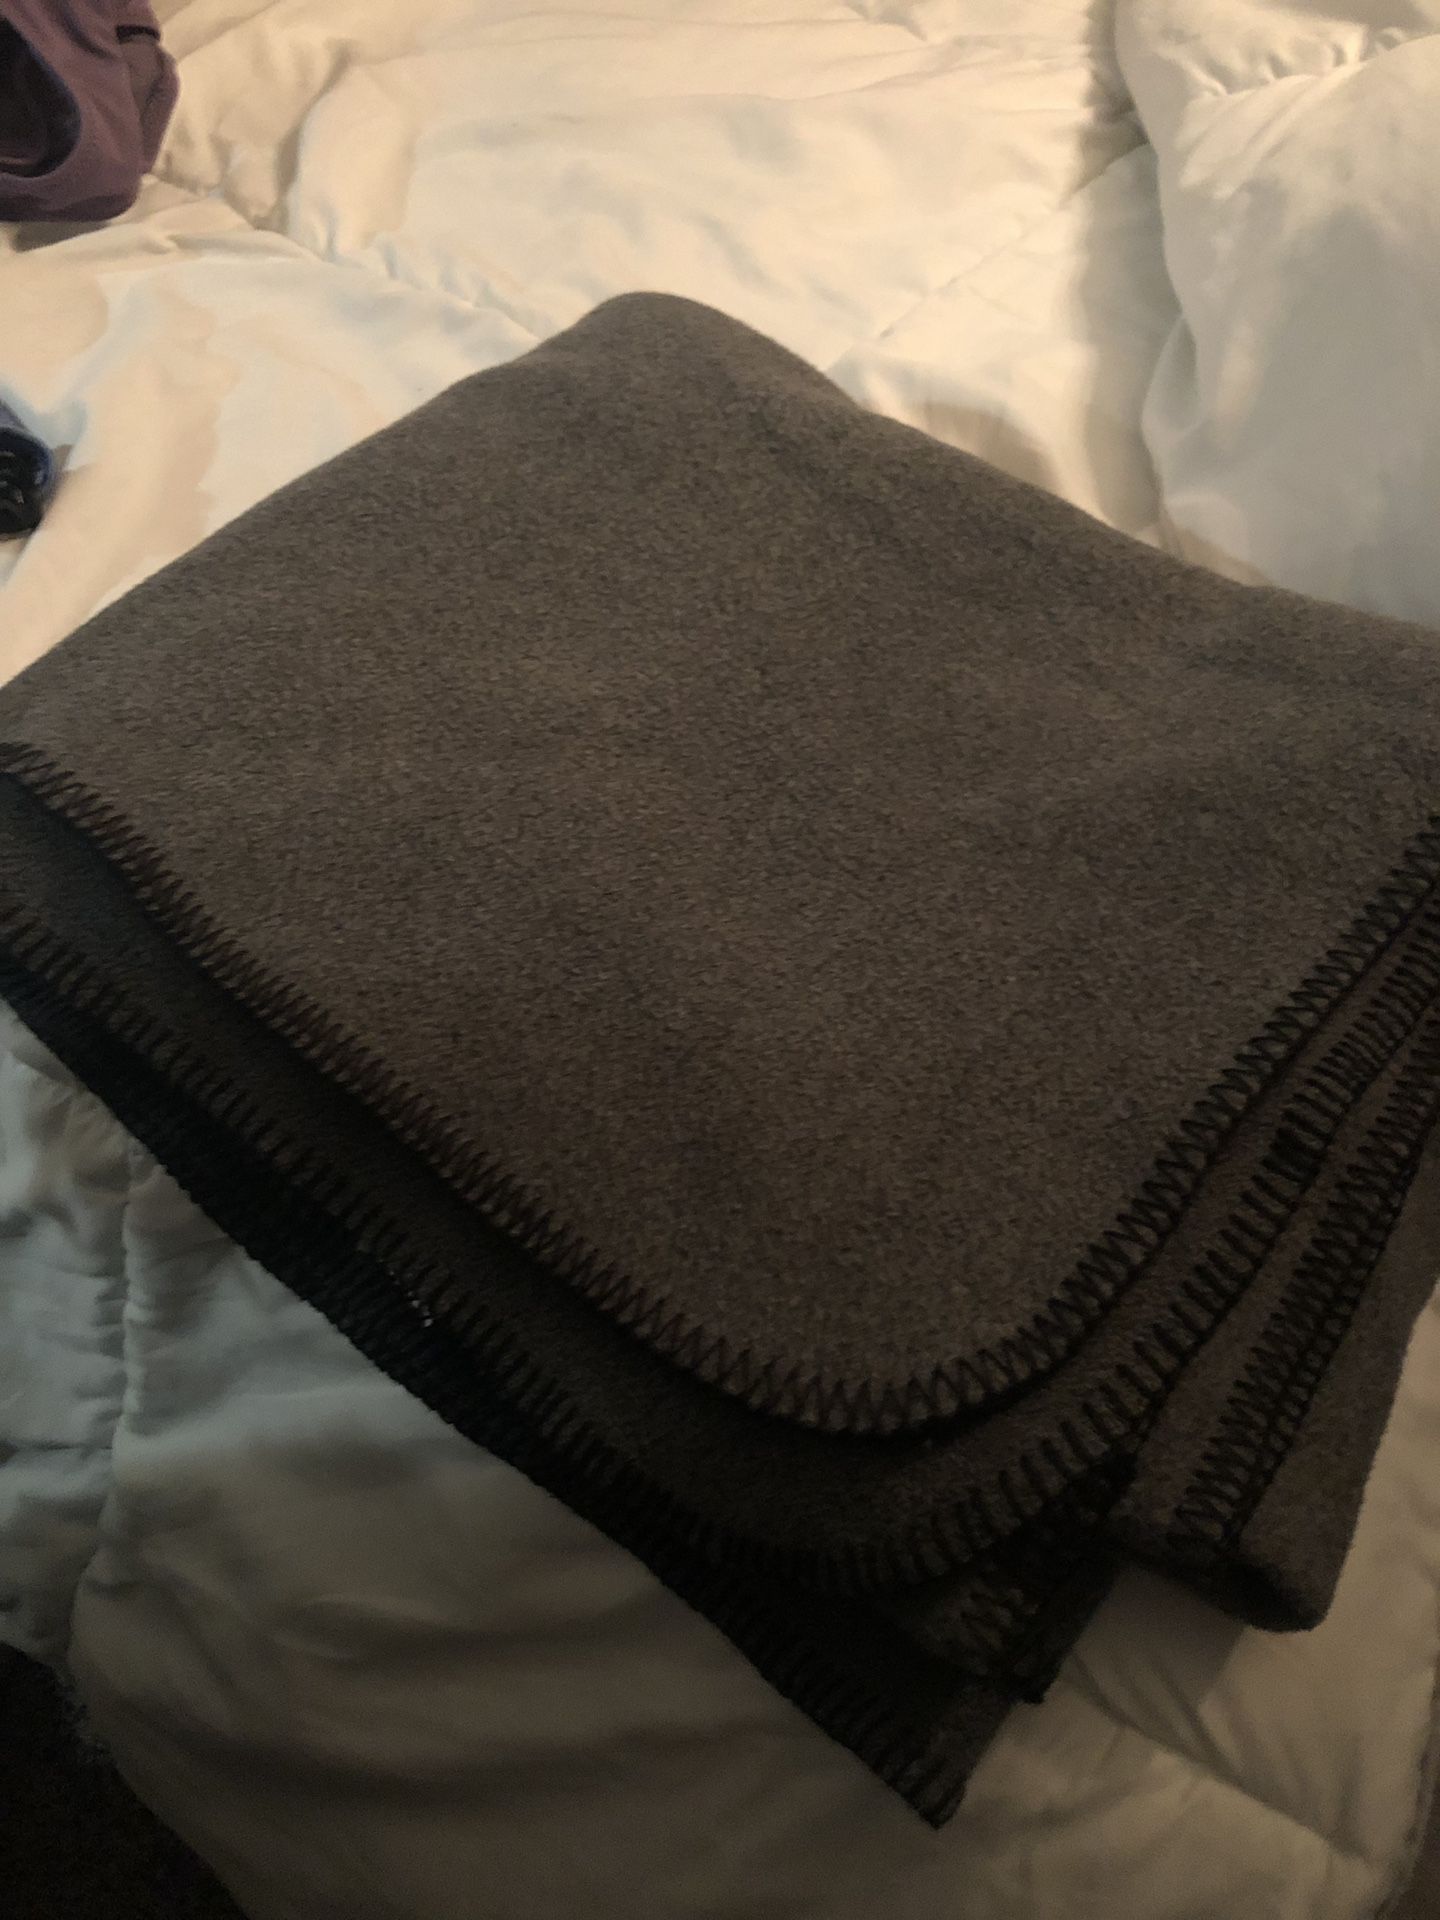 Fleece blanket ... twin like size like new